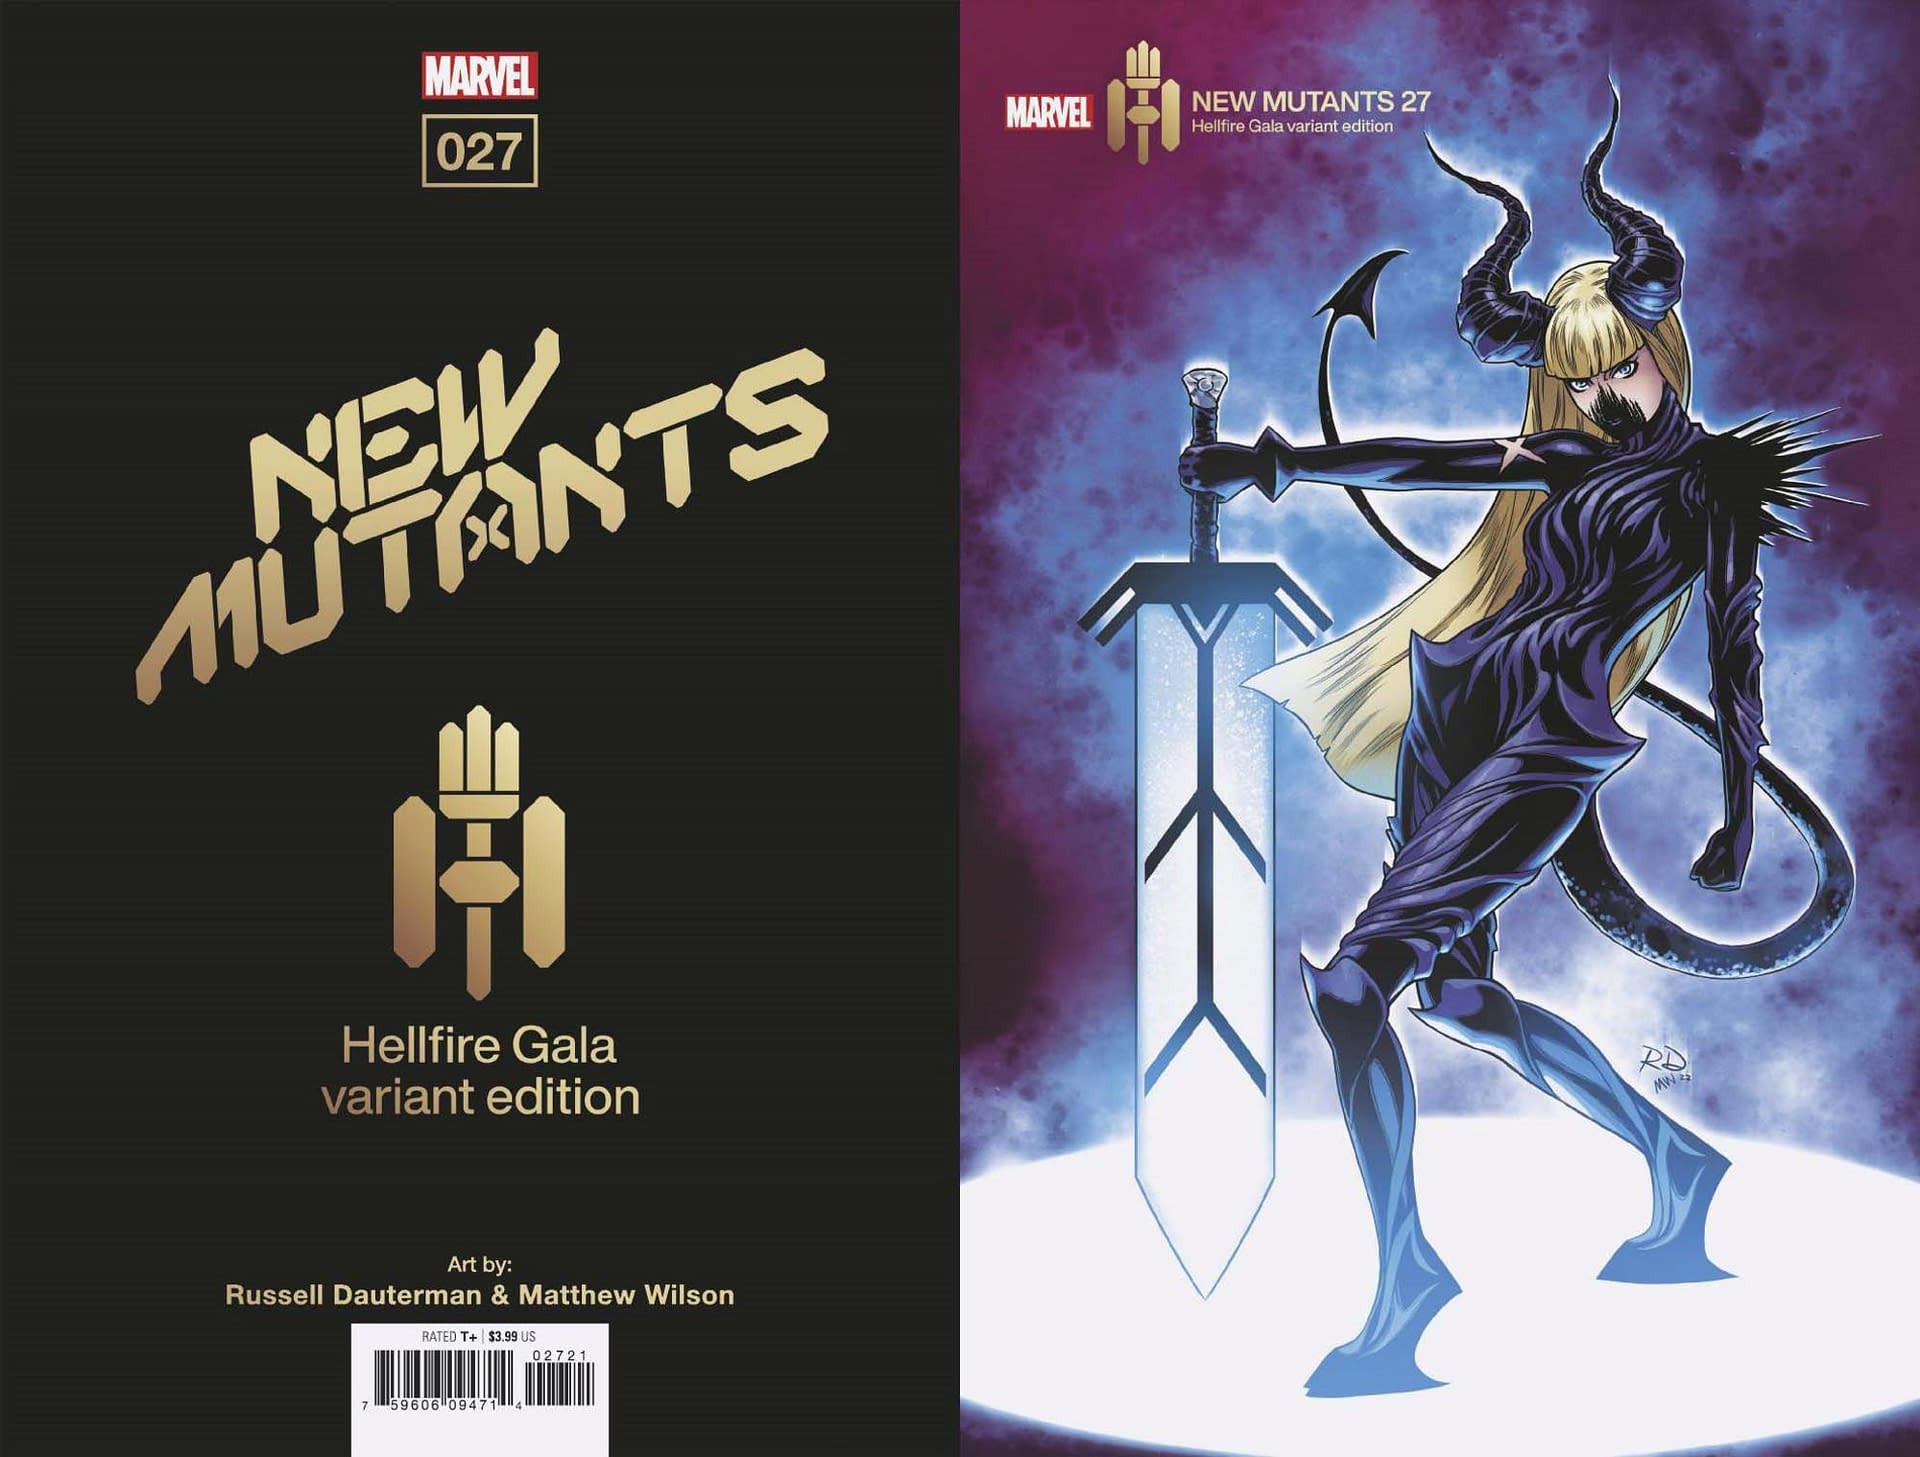 New Mutants #27 Preview: Magik Makes a Friend